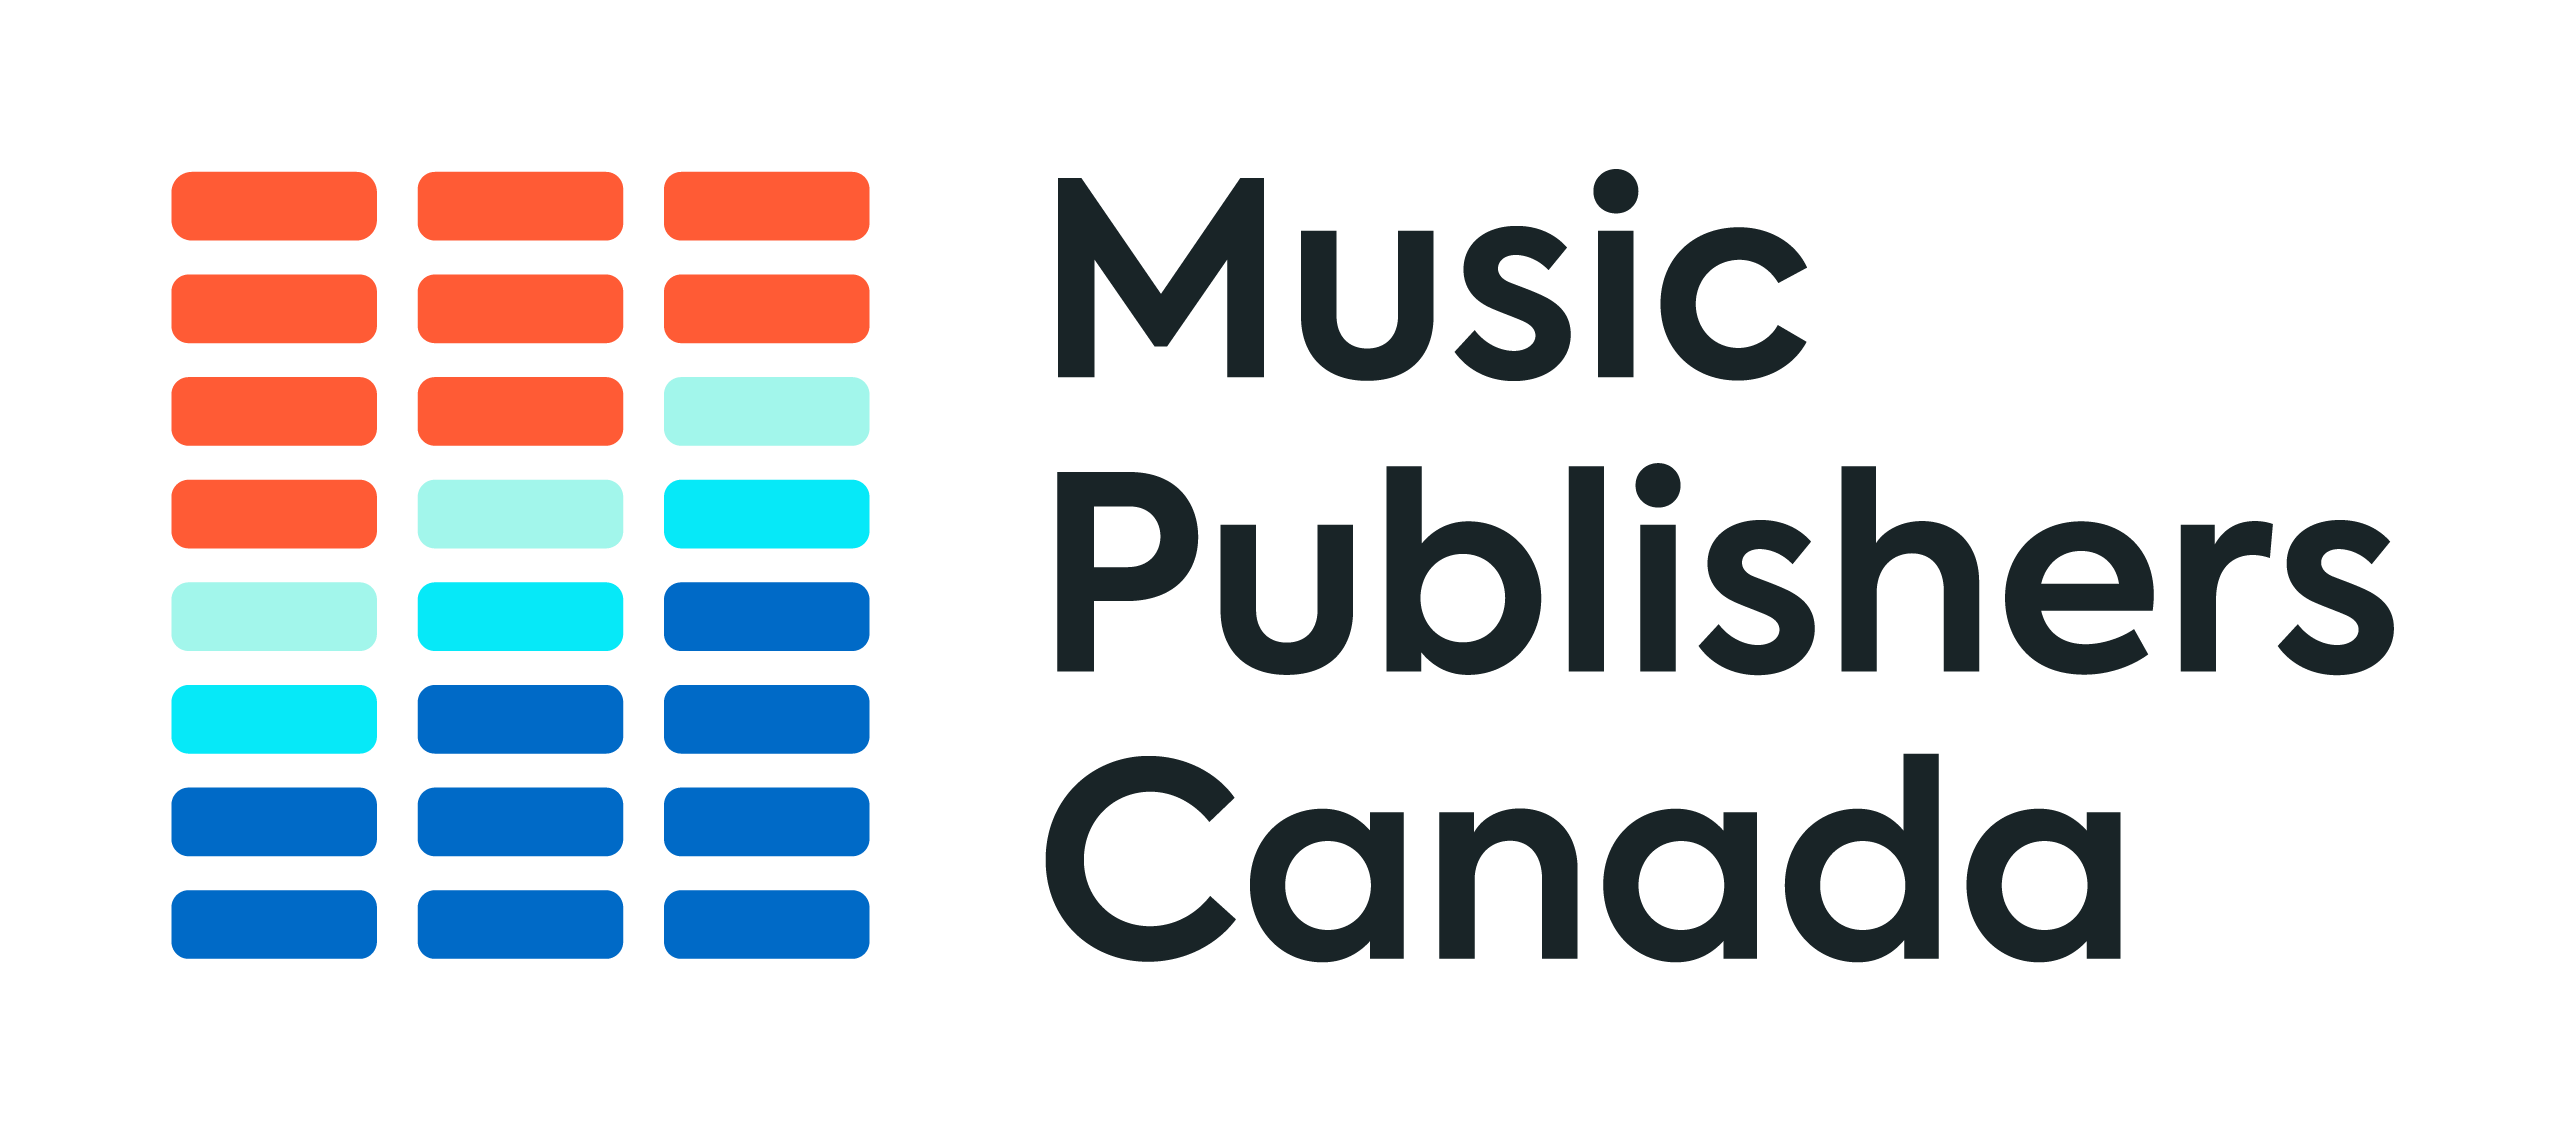 Music Publishers